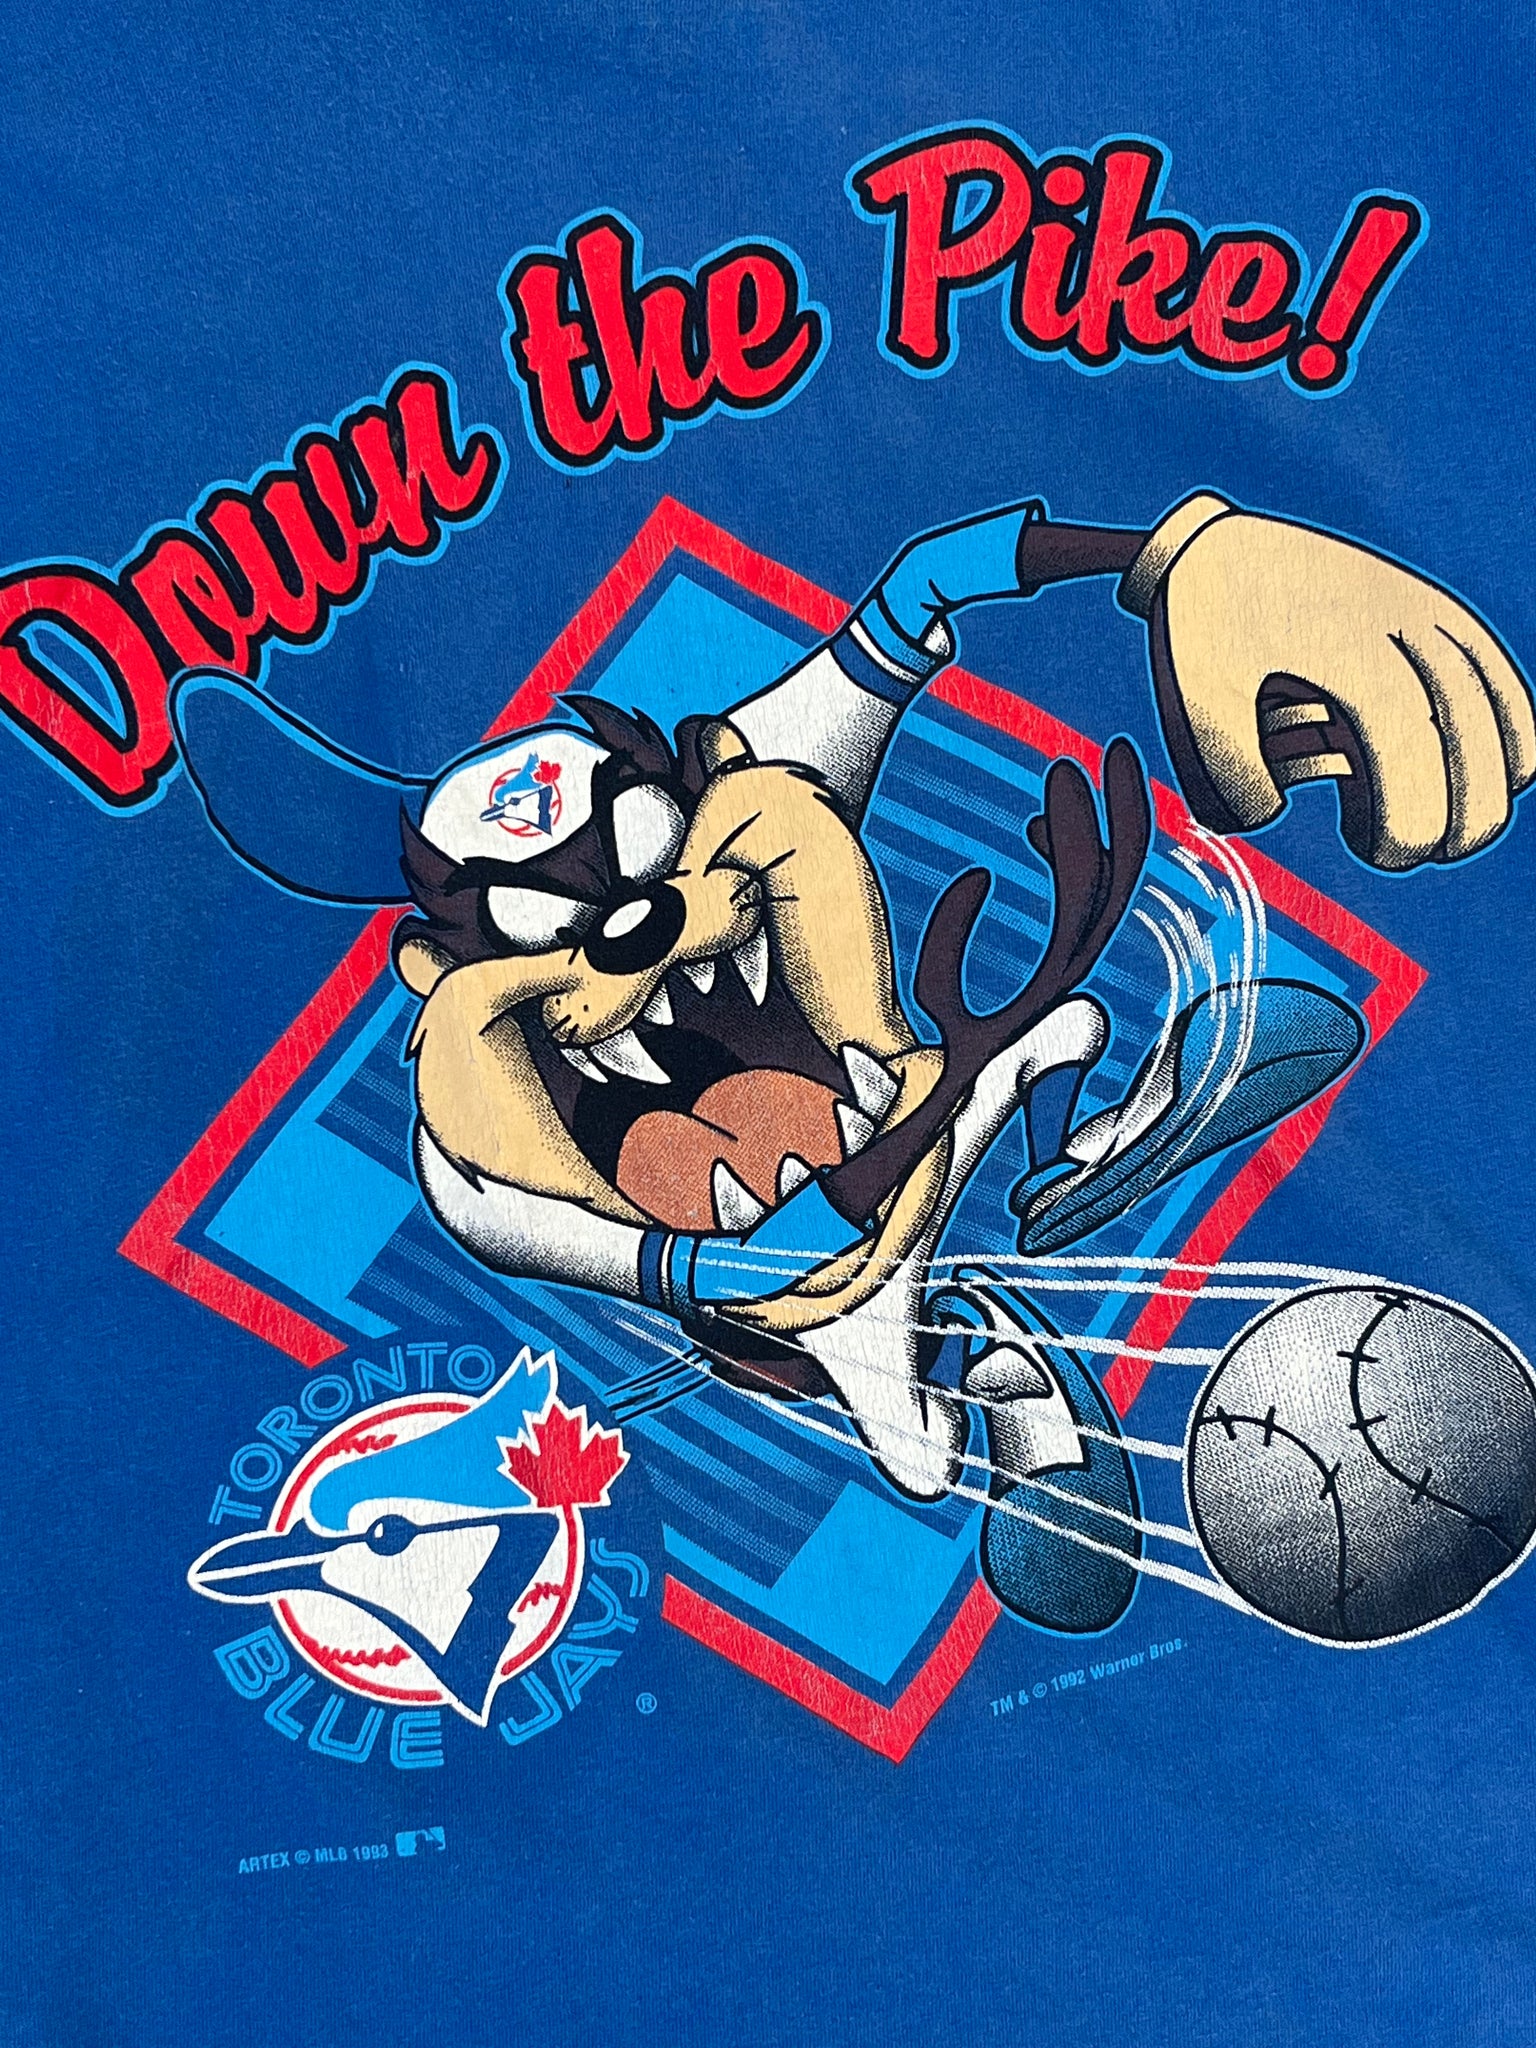 1993 Vintage Toronto Blue Jays Shirt